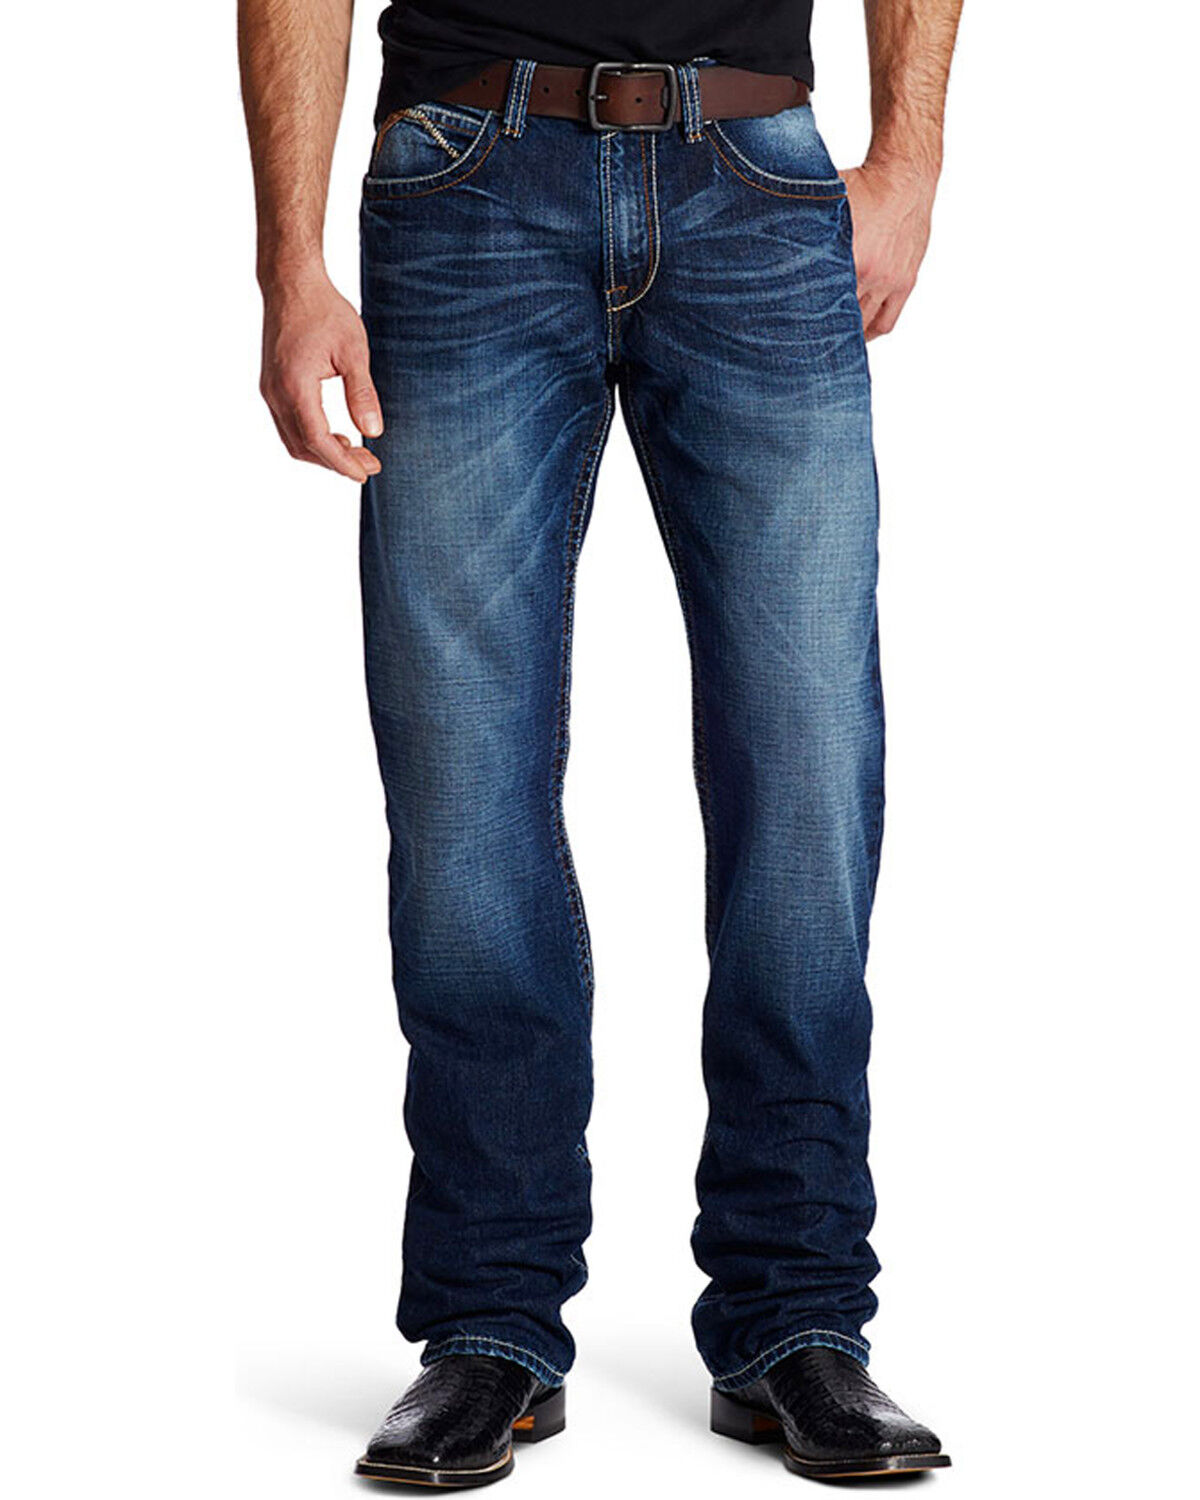 mens dark bootcut jeans